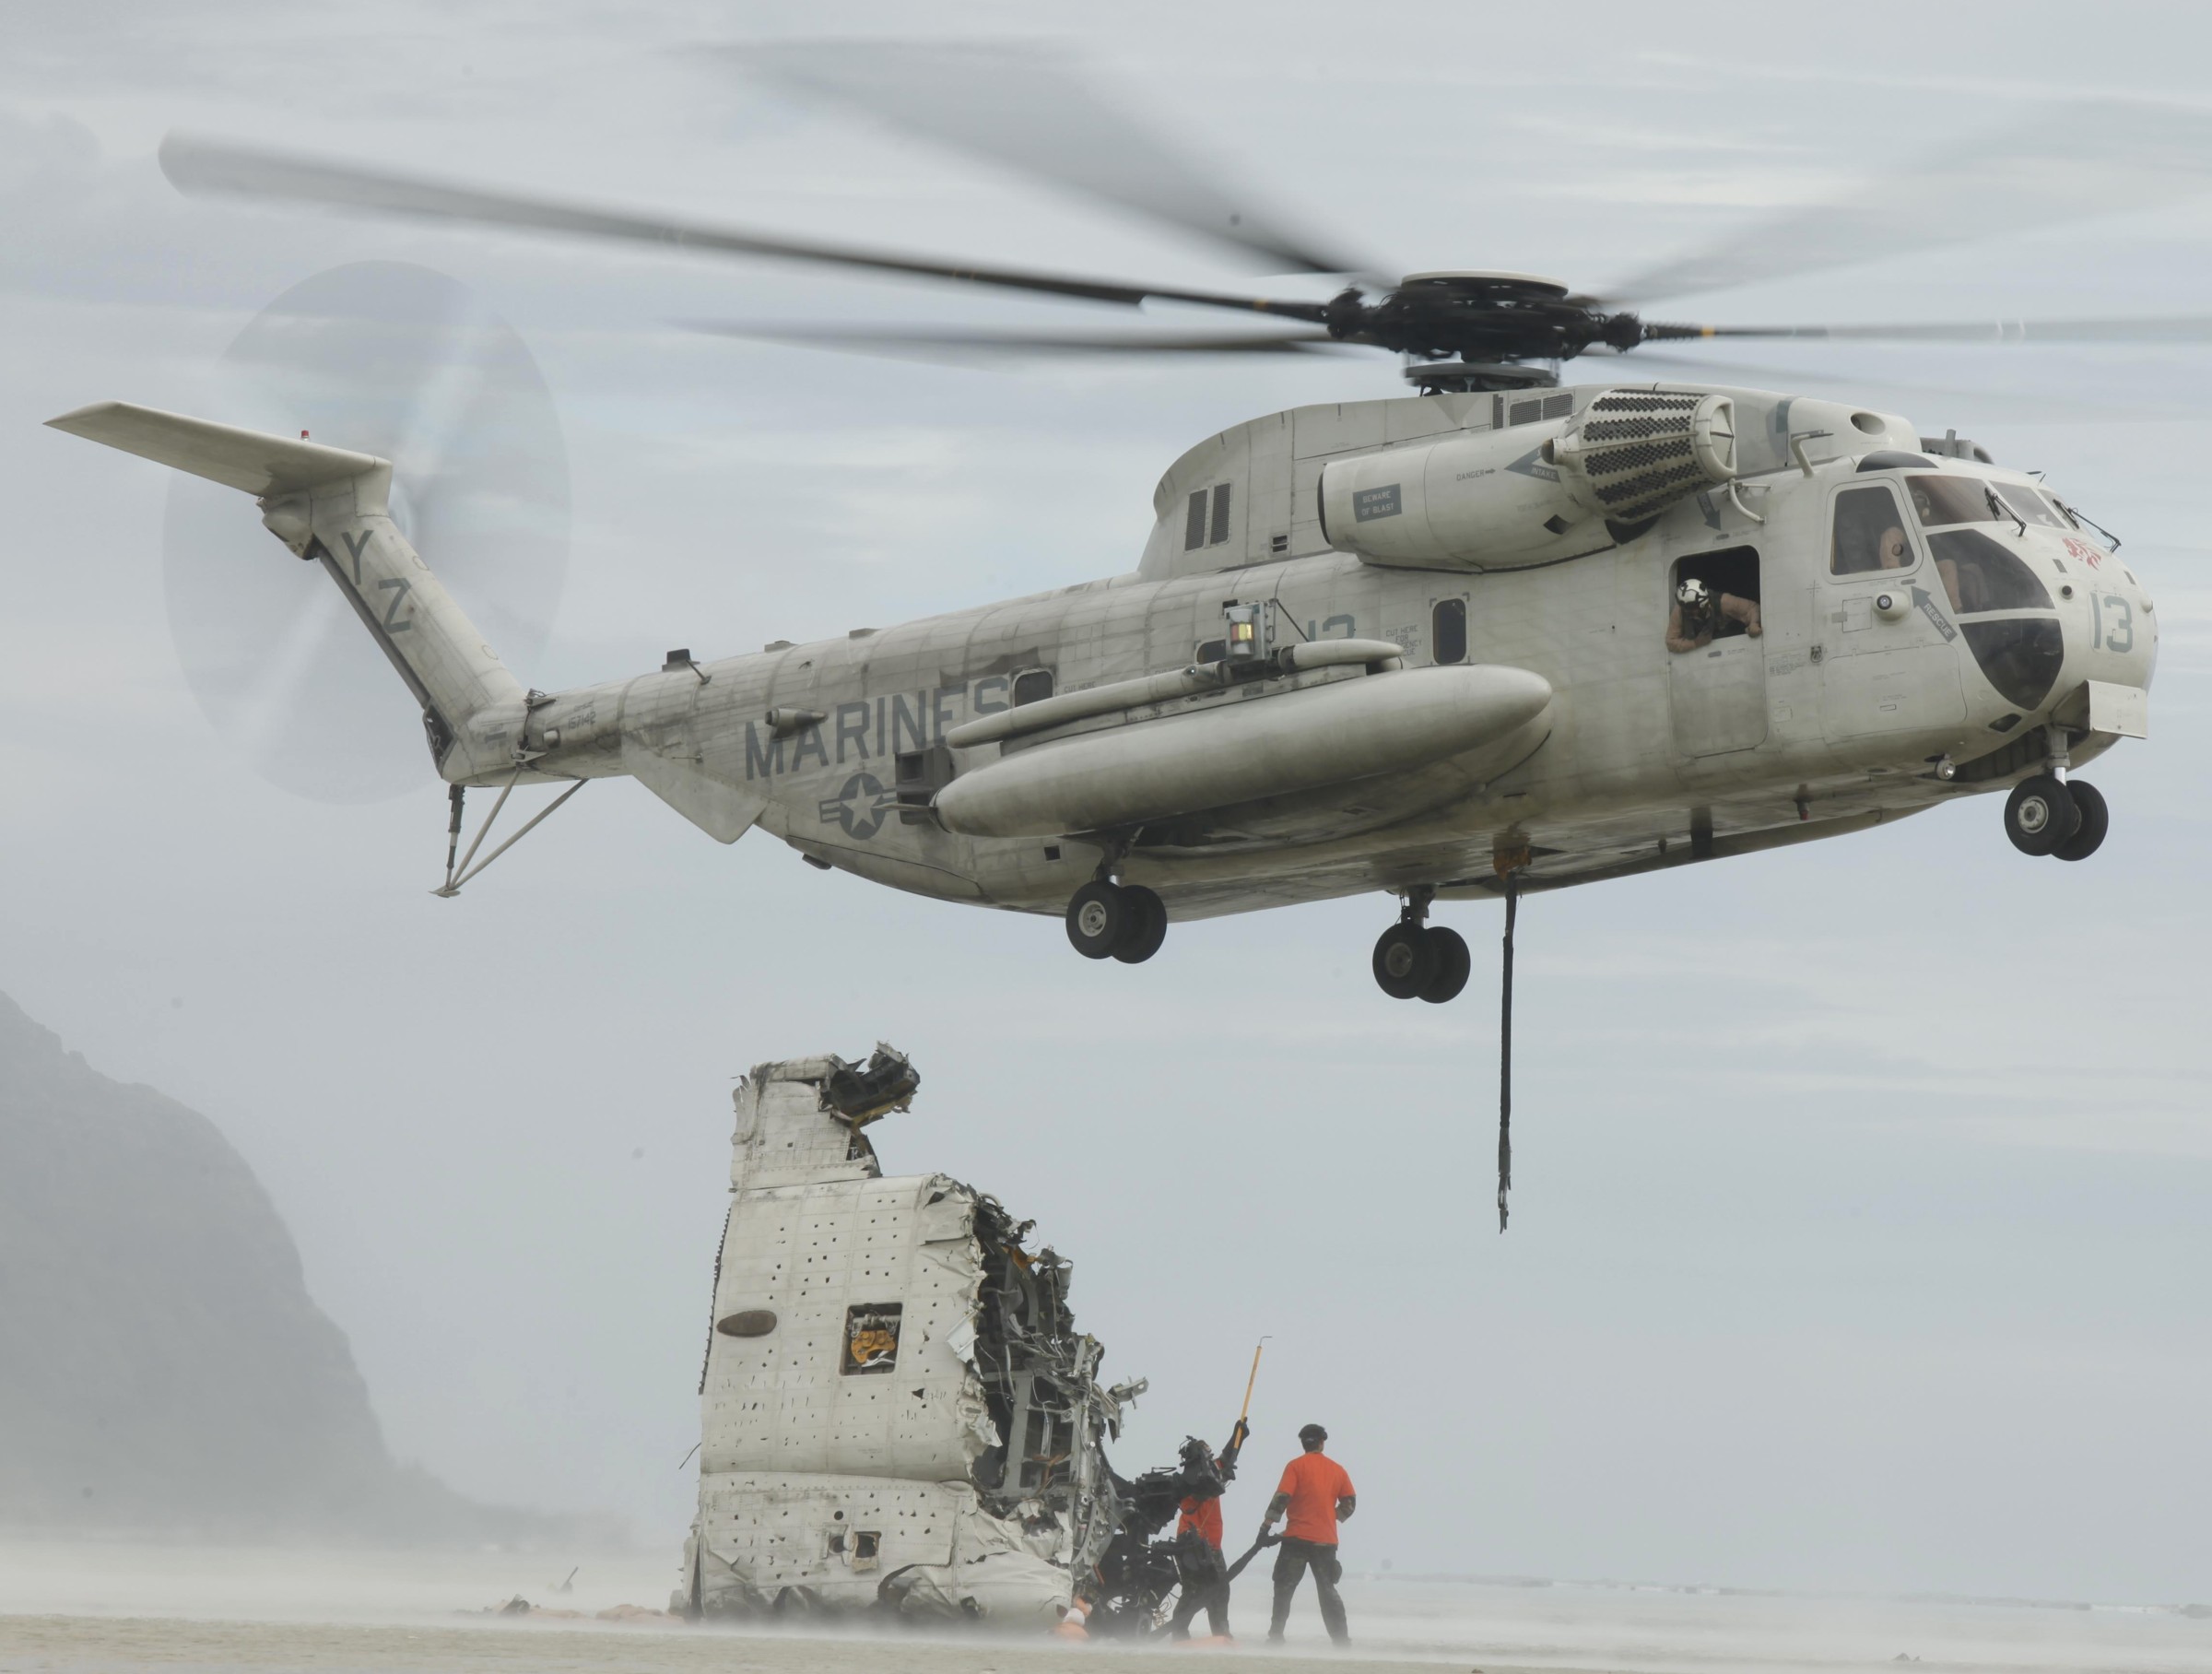 hmh-363 red lions marine heavy helicopter squadron usmc sikorsky ch-53d sea stallion 34 mcb hawaii kaneoha bay